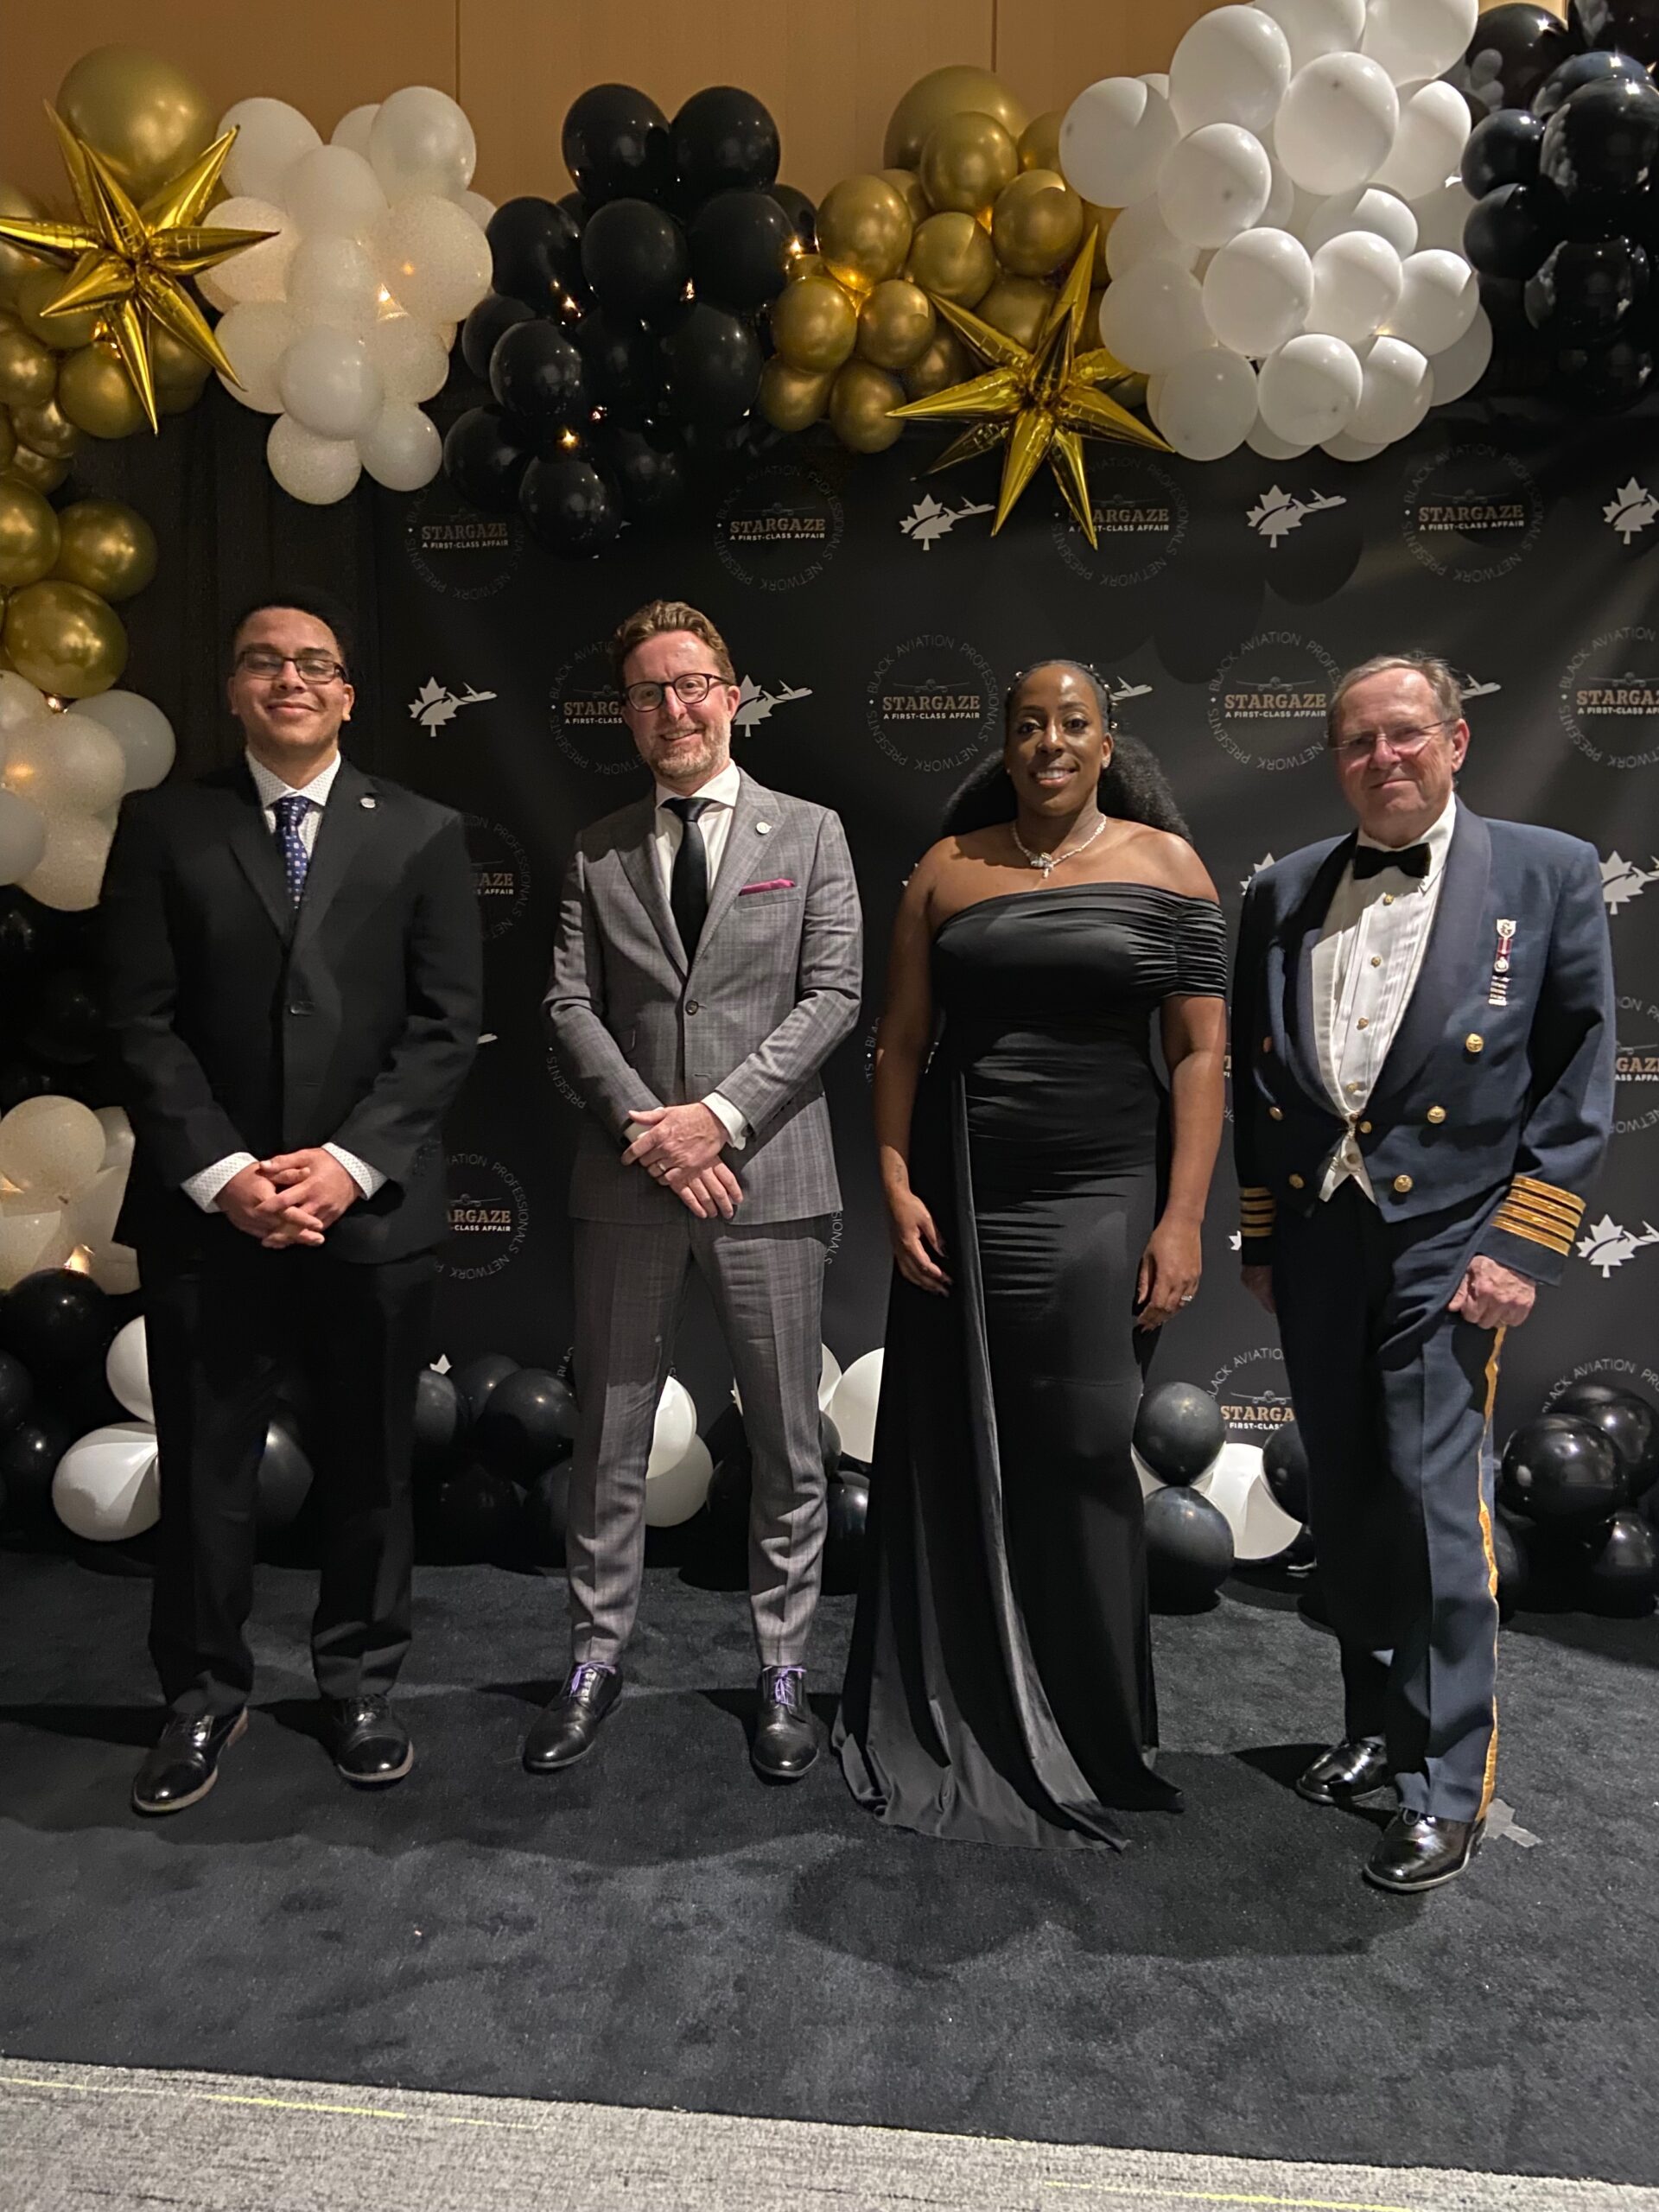 Photo of Adam Gibson, Jeremy Diamond, John Wright, and Tonya Yearwood posing on gala backdrop with balloons.